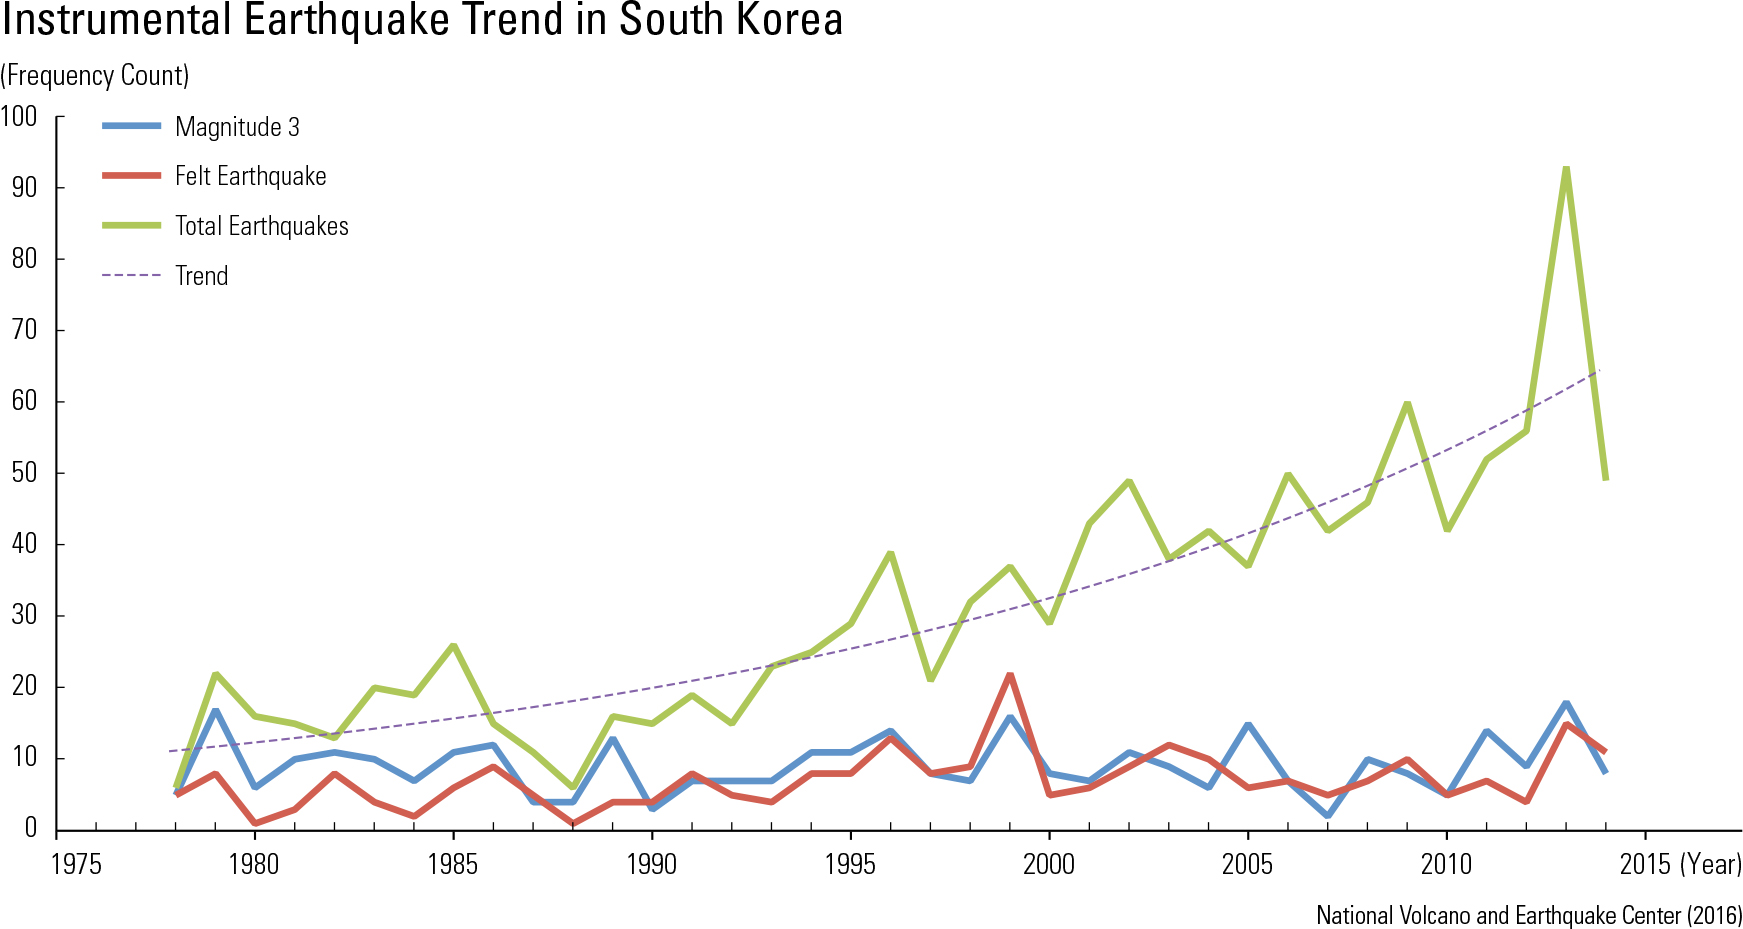 Instrumental Earthquake Trend in South Korea<p class="oz_zoom" zimg="http://imagedata.cafe24.com/us_2/us2_47-3_2.jpg"><span style="font-family:Nanum Myeongjo;"><span style="font-size:18px;"><span class="label label-danger">UPDATE DATA</span></span></p>